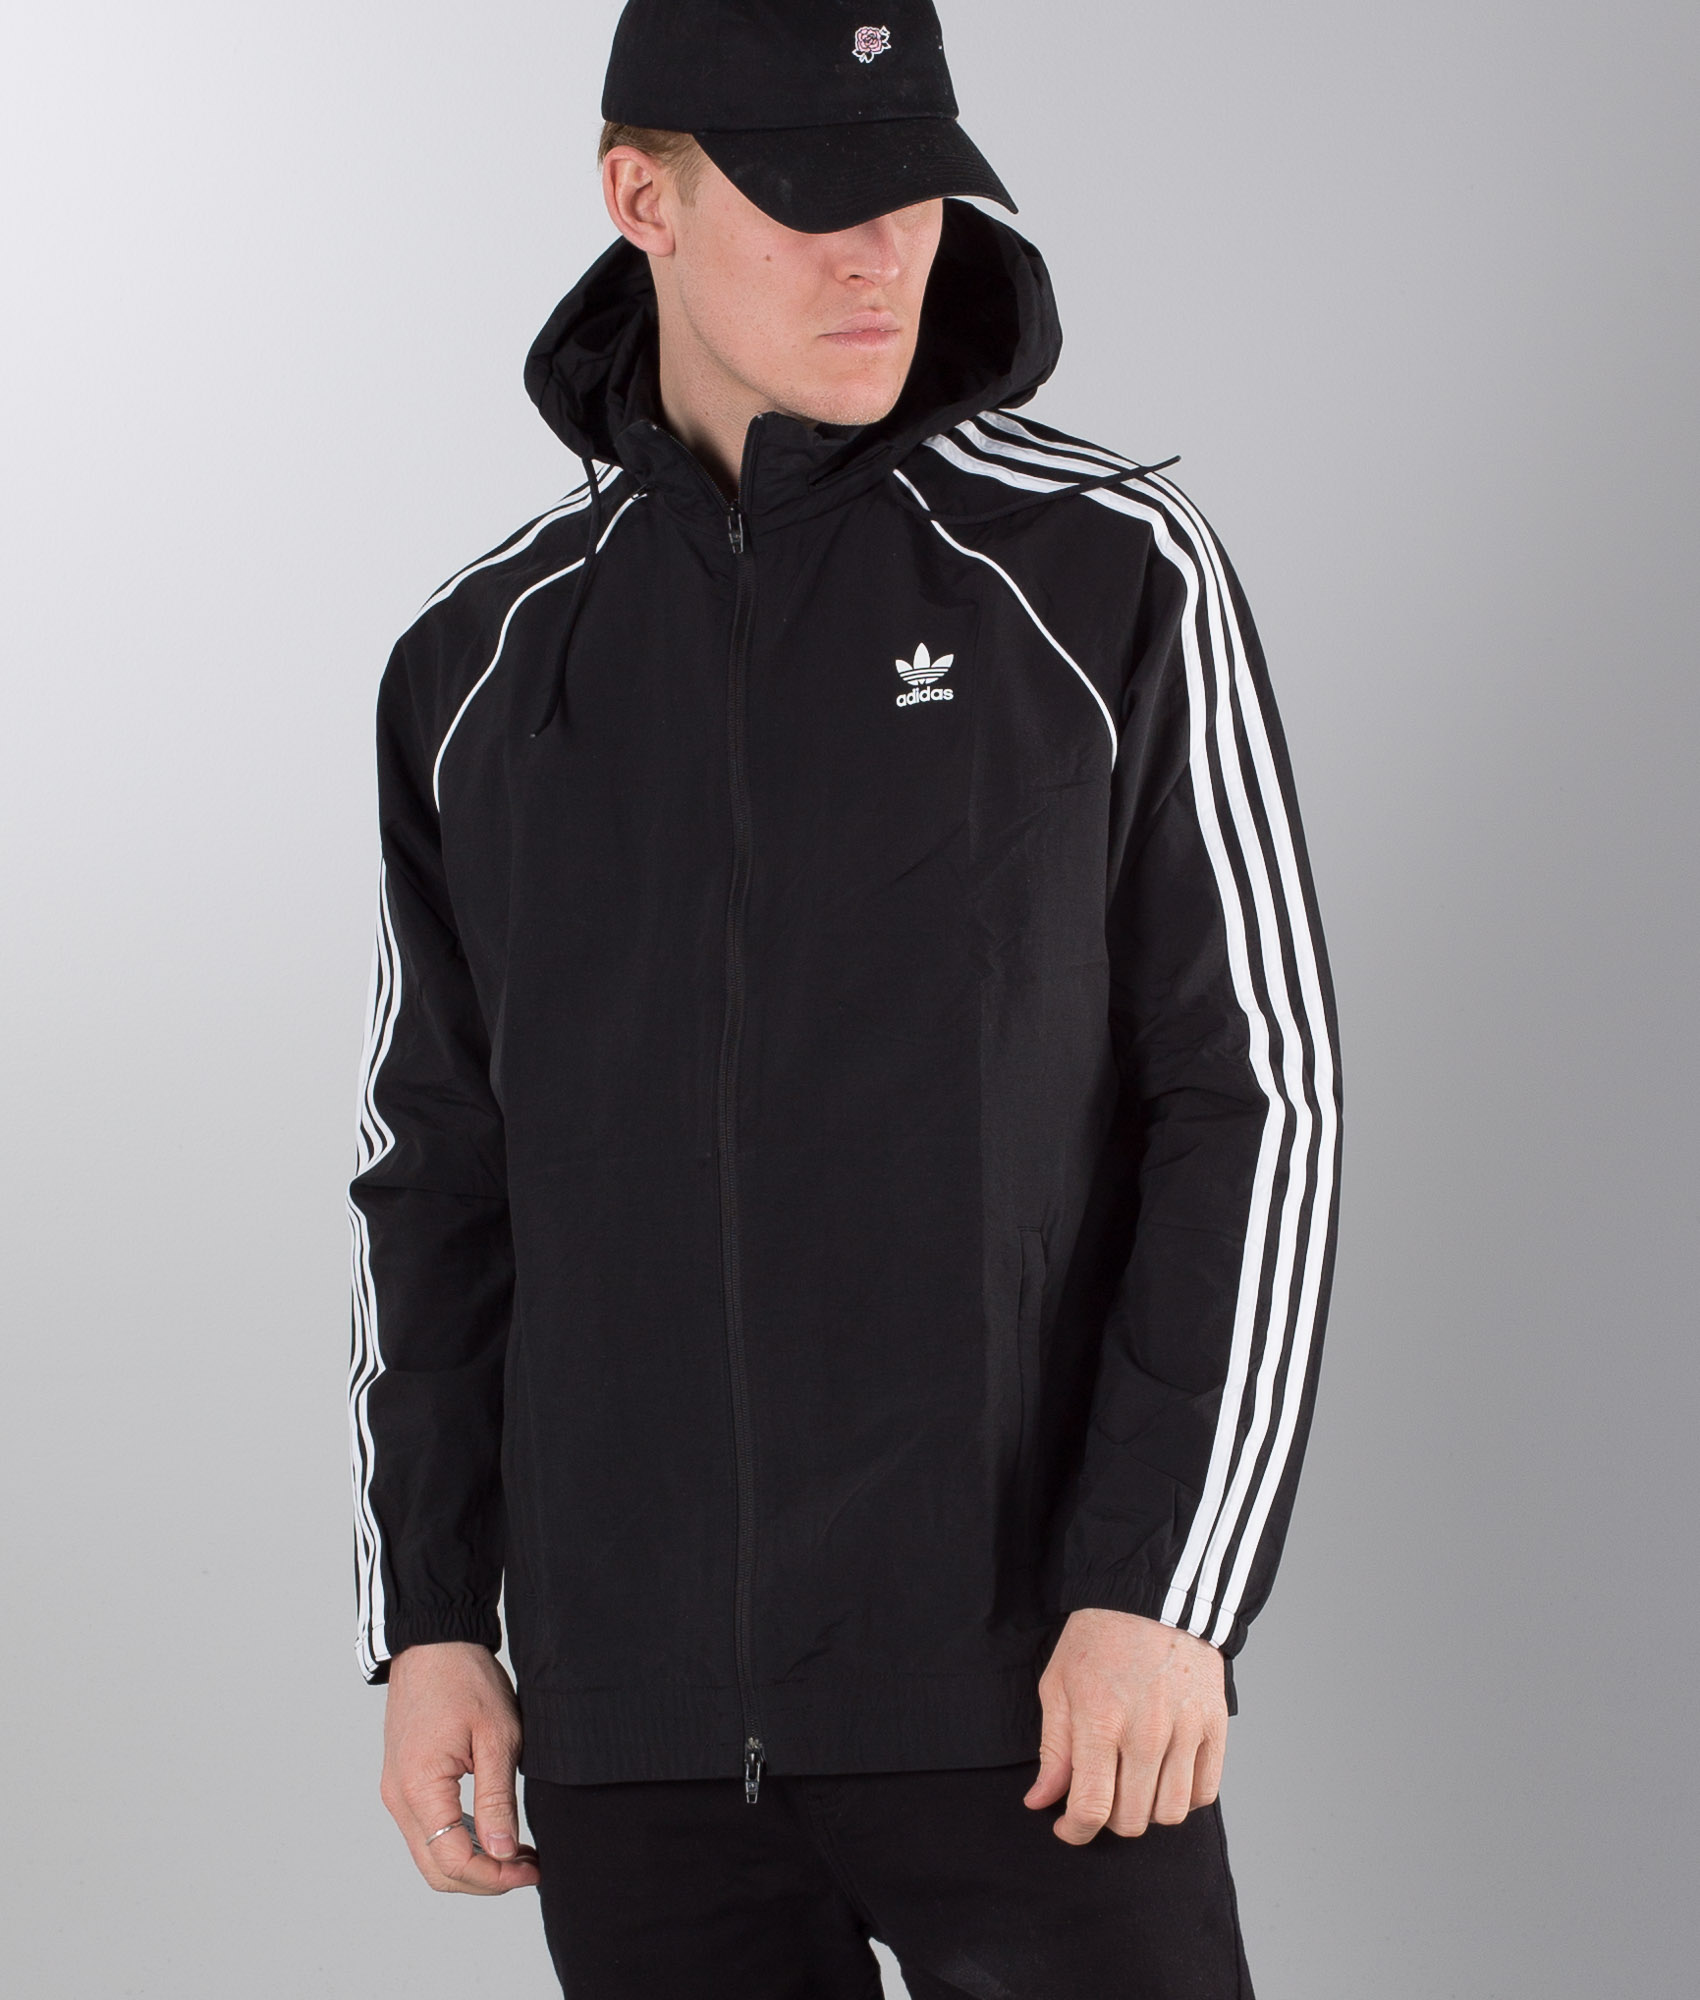 Adidas Originals SST Jacket Black 